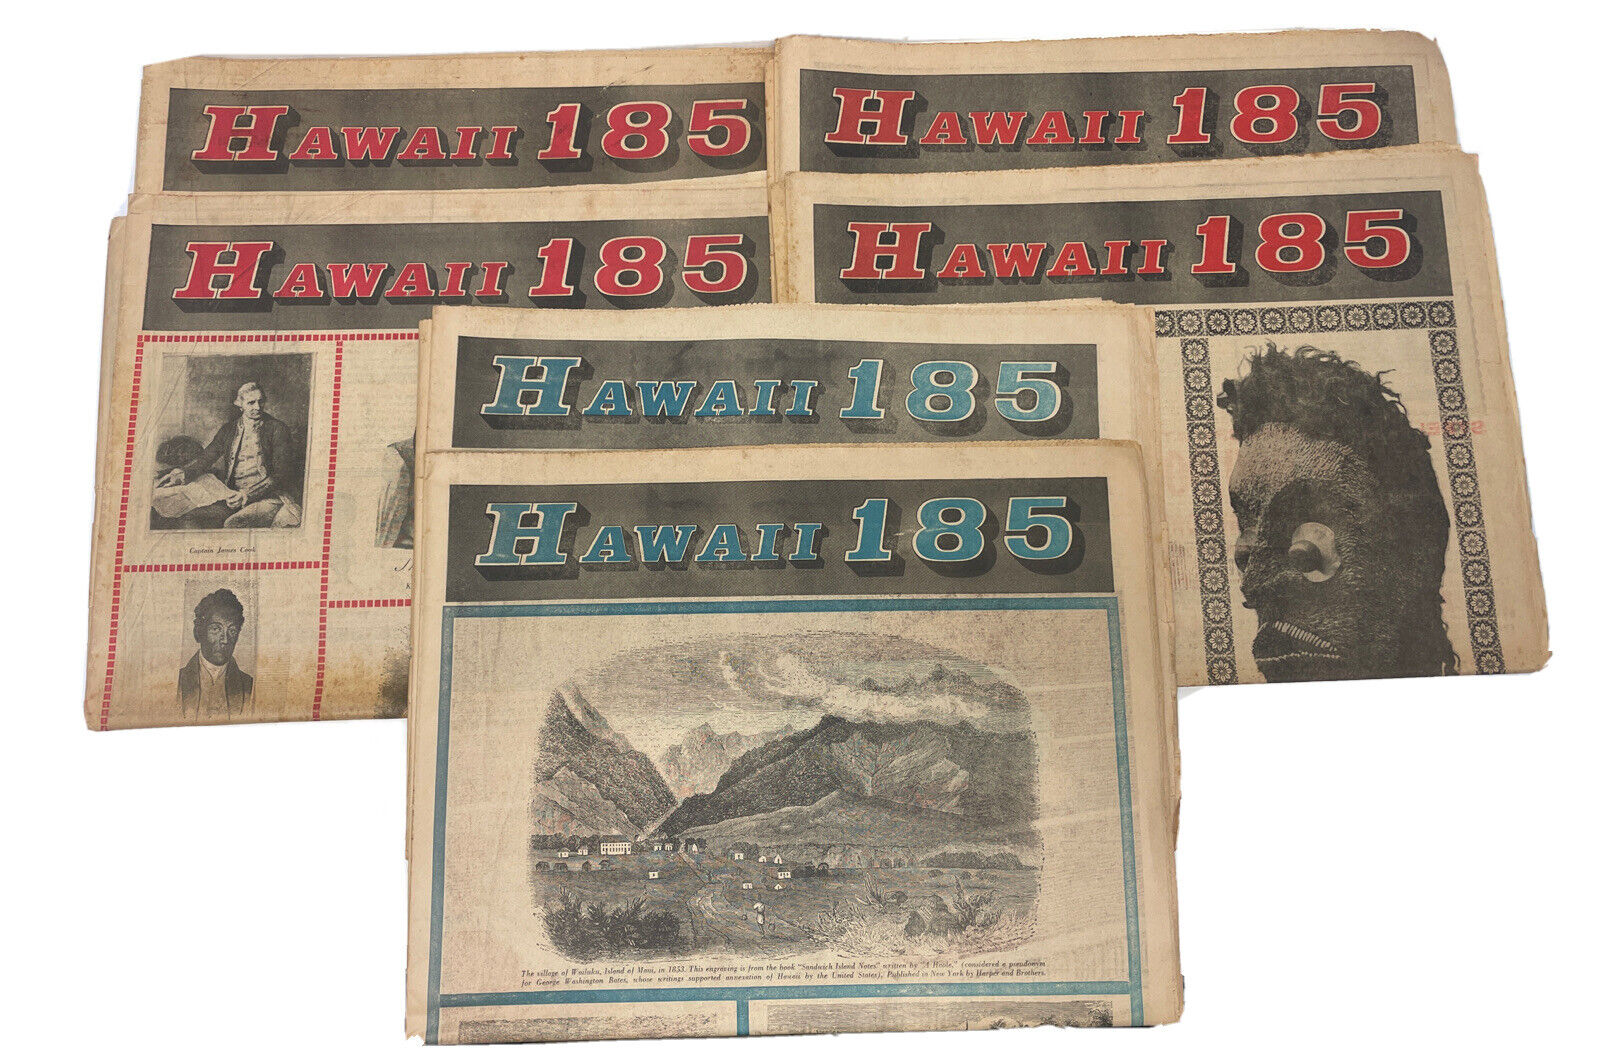 Honolulu Star Bulletin Hawaii 185: Annual Progress Tuesday, January 29, 1963 |